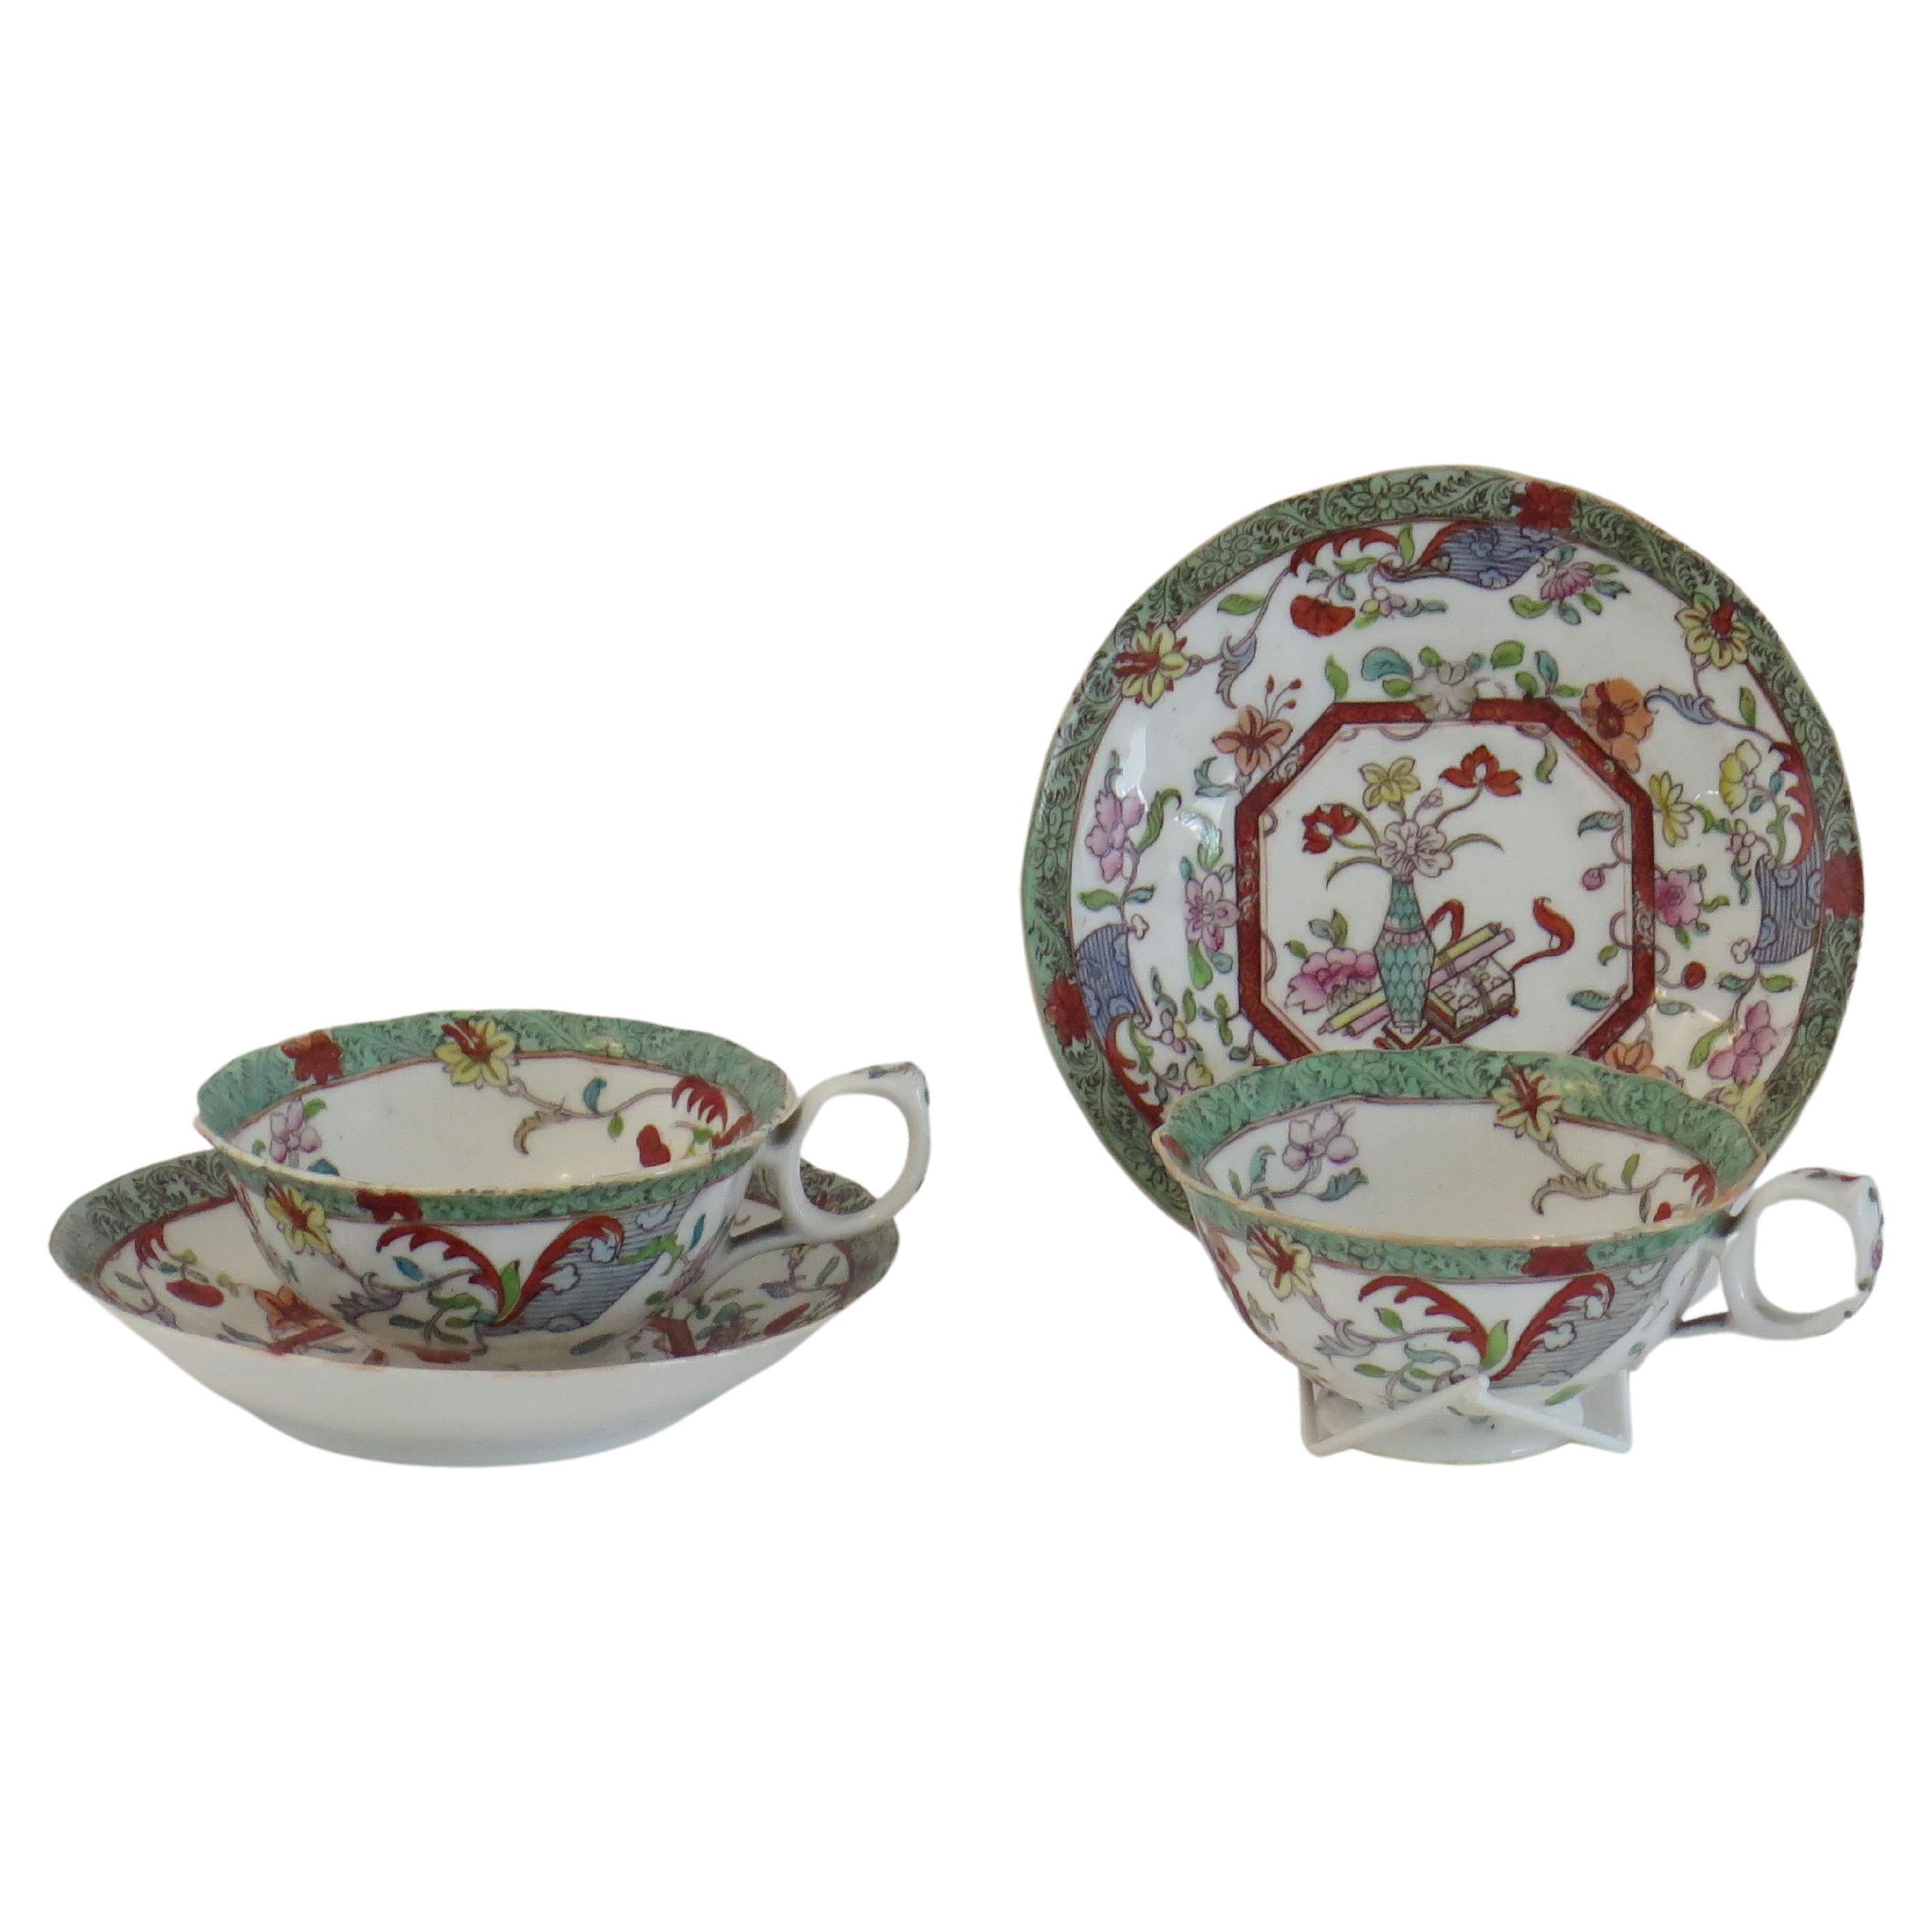 William IVth PAIR-(B) of C J Mason’s Cups & Saucers Porcelain Ptn 223, Ca 1830